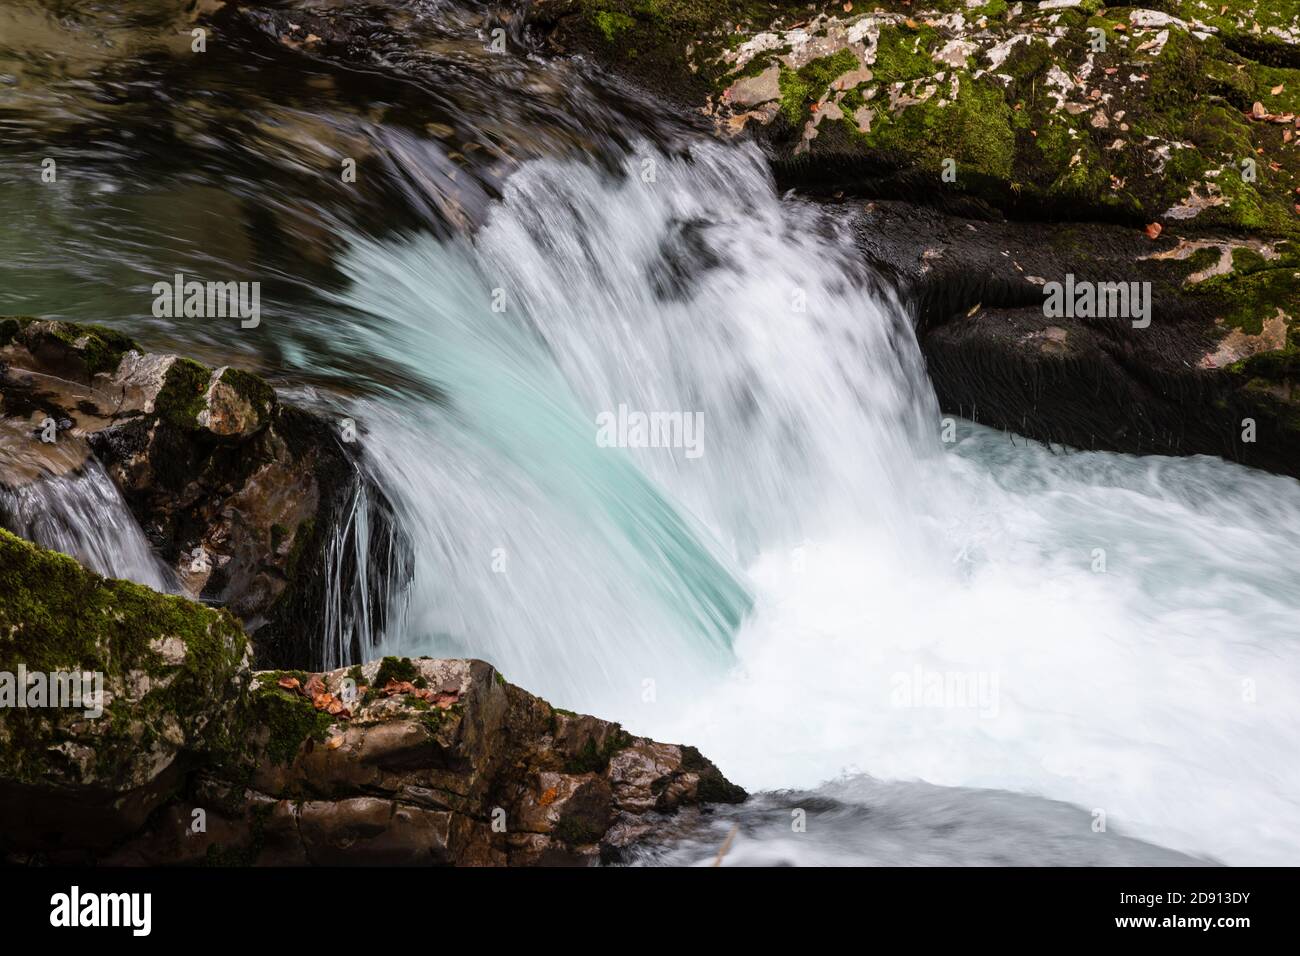 Rapids fo the Radvona river in Slovenia's Vintgar gorge Stock Photo